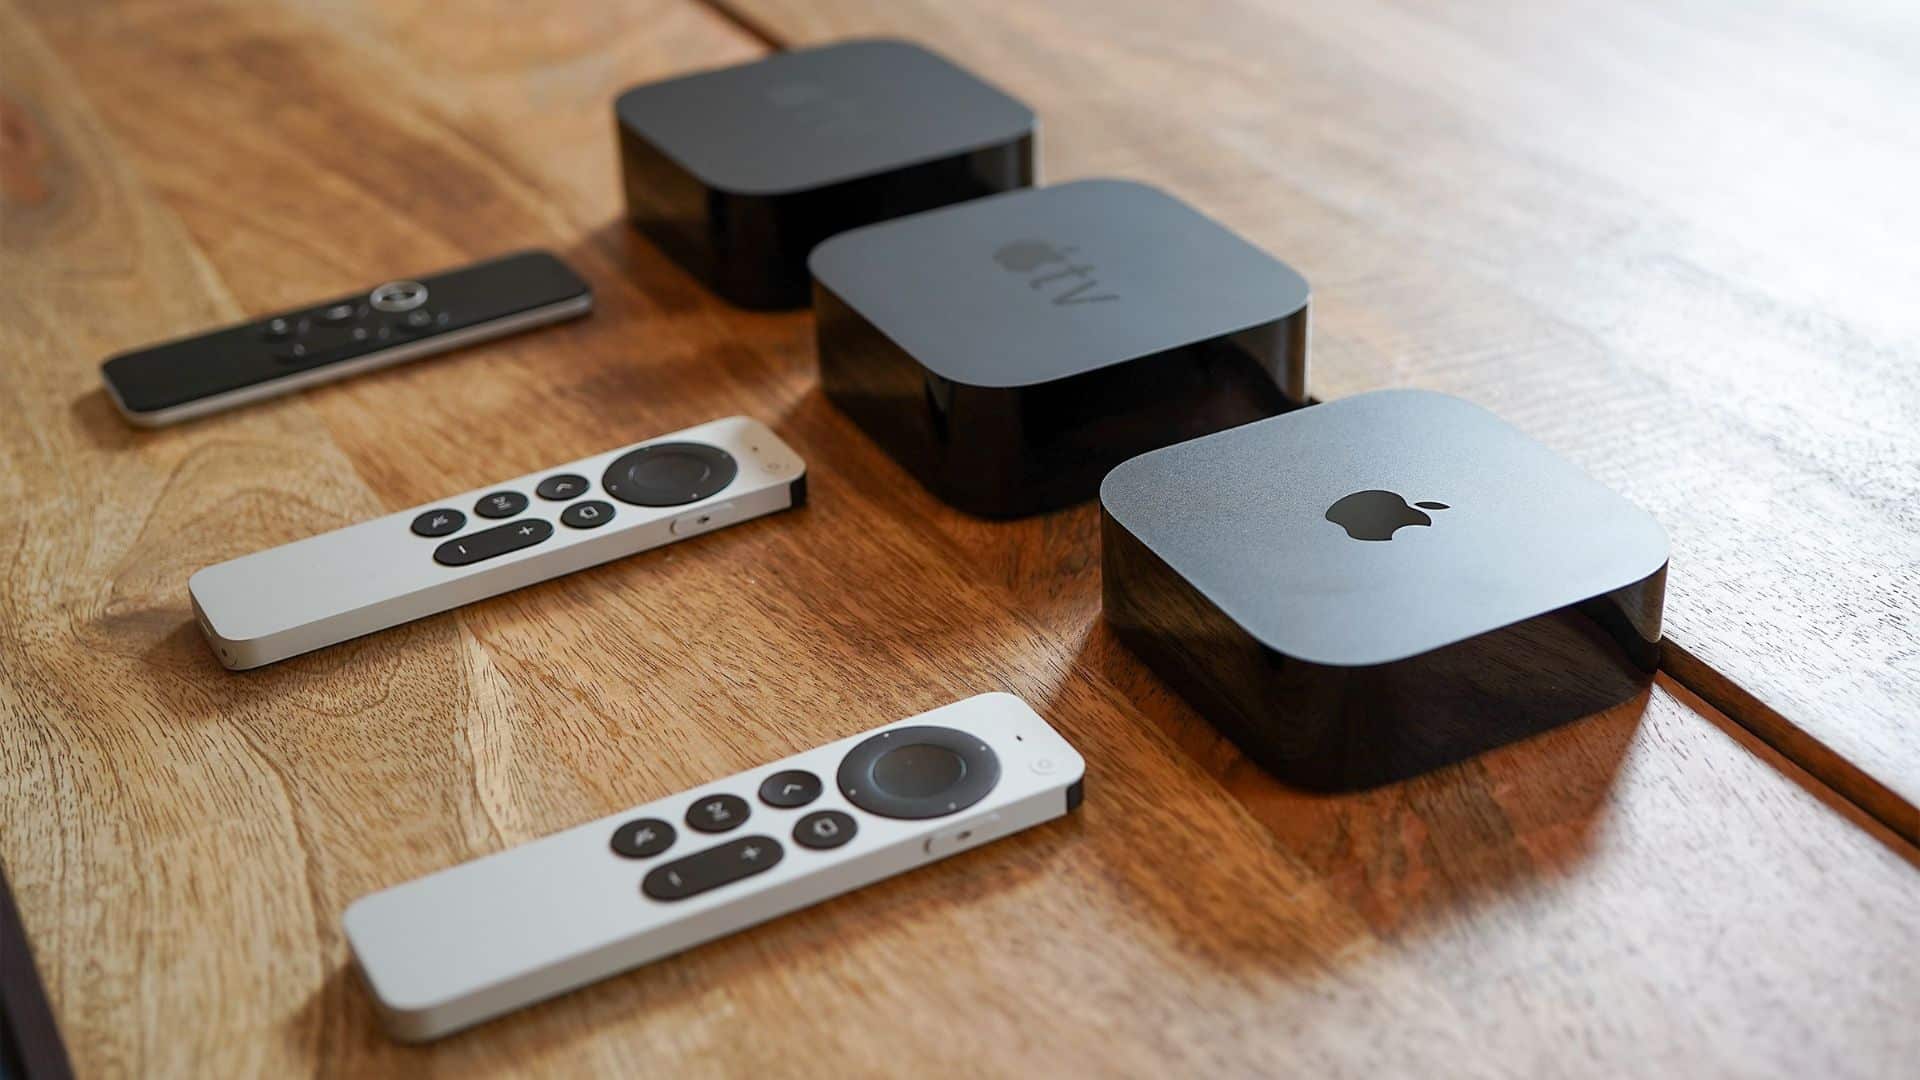 Apple TV 4K (2022) Review: The Best Streaming Box So Far